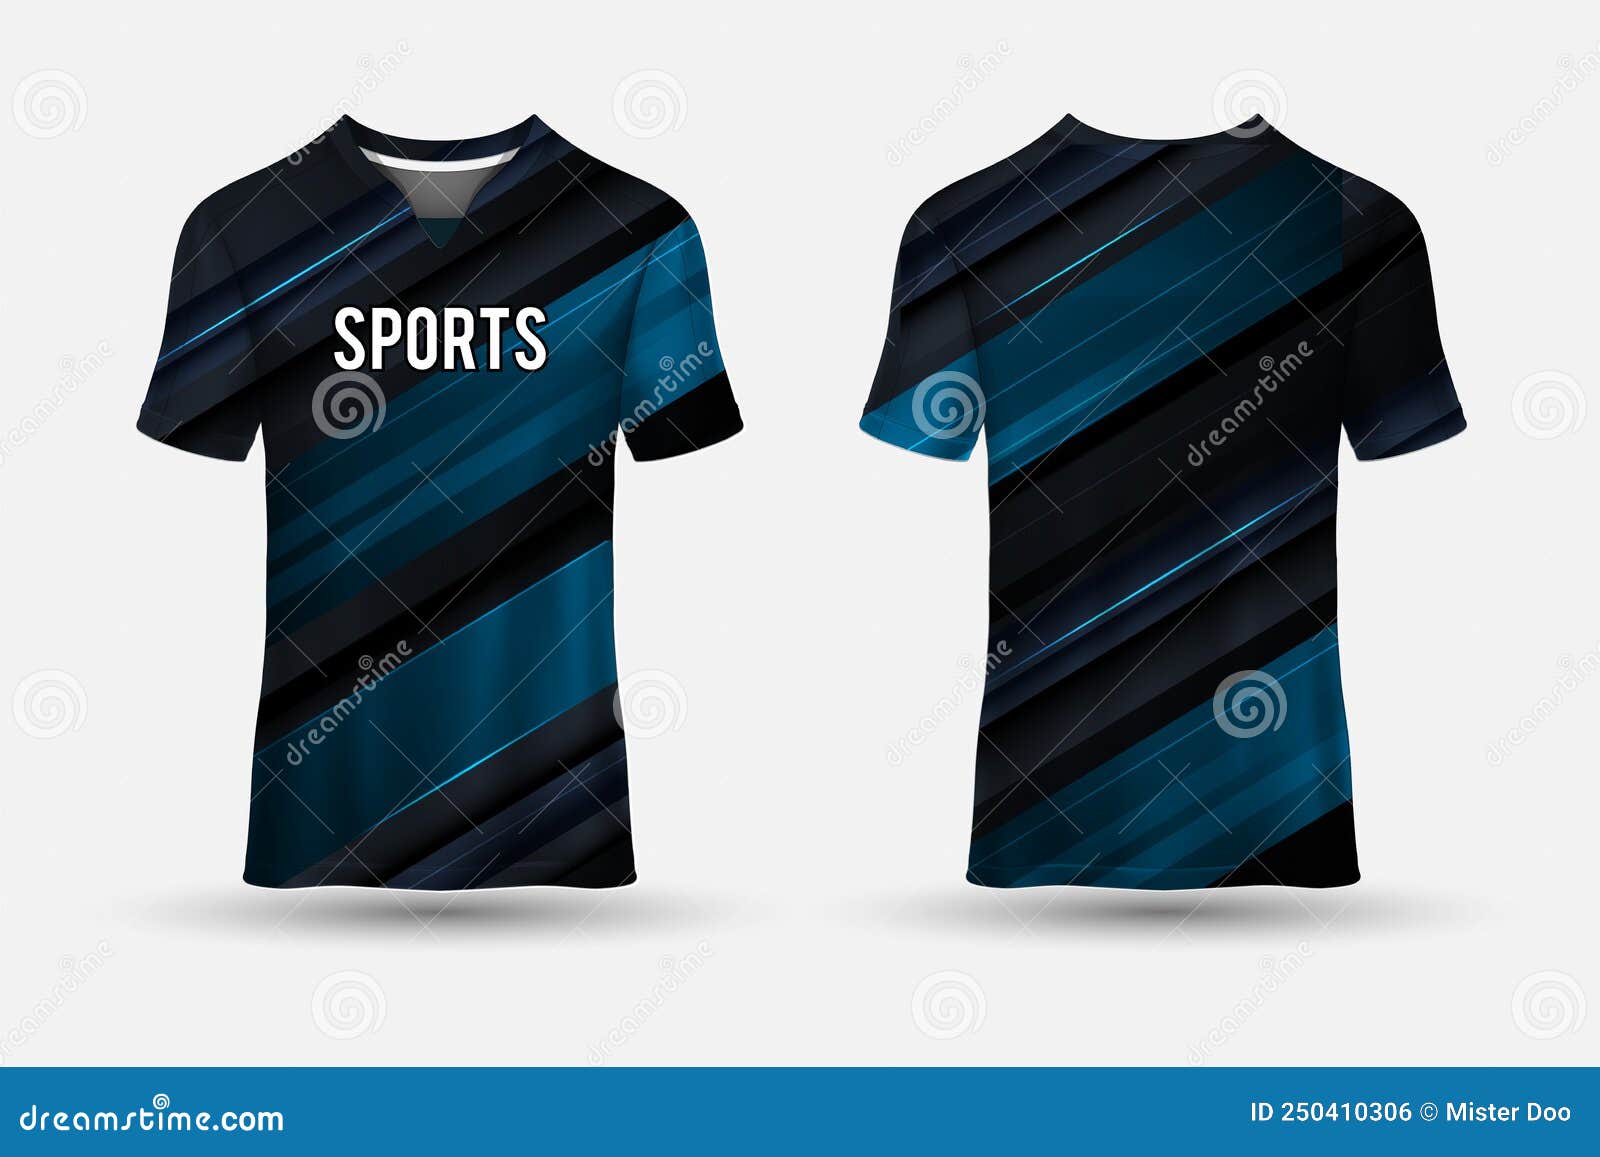 Modern Sports Jersey Design Vector and T Shirt Template Sports Design ...